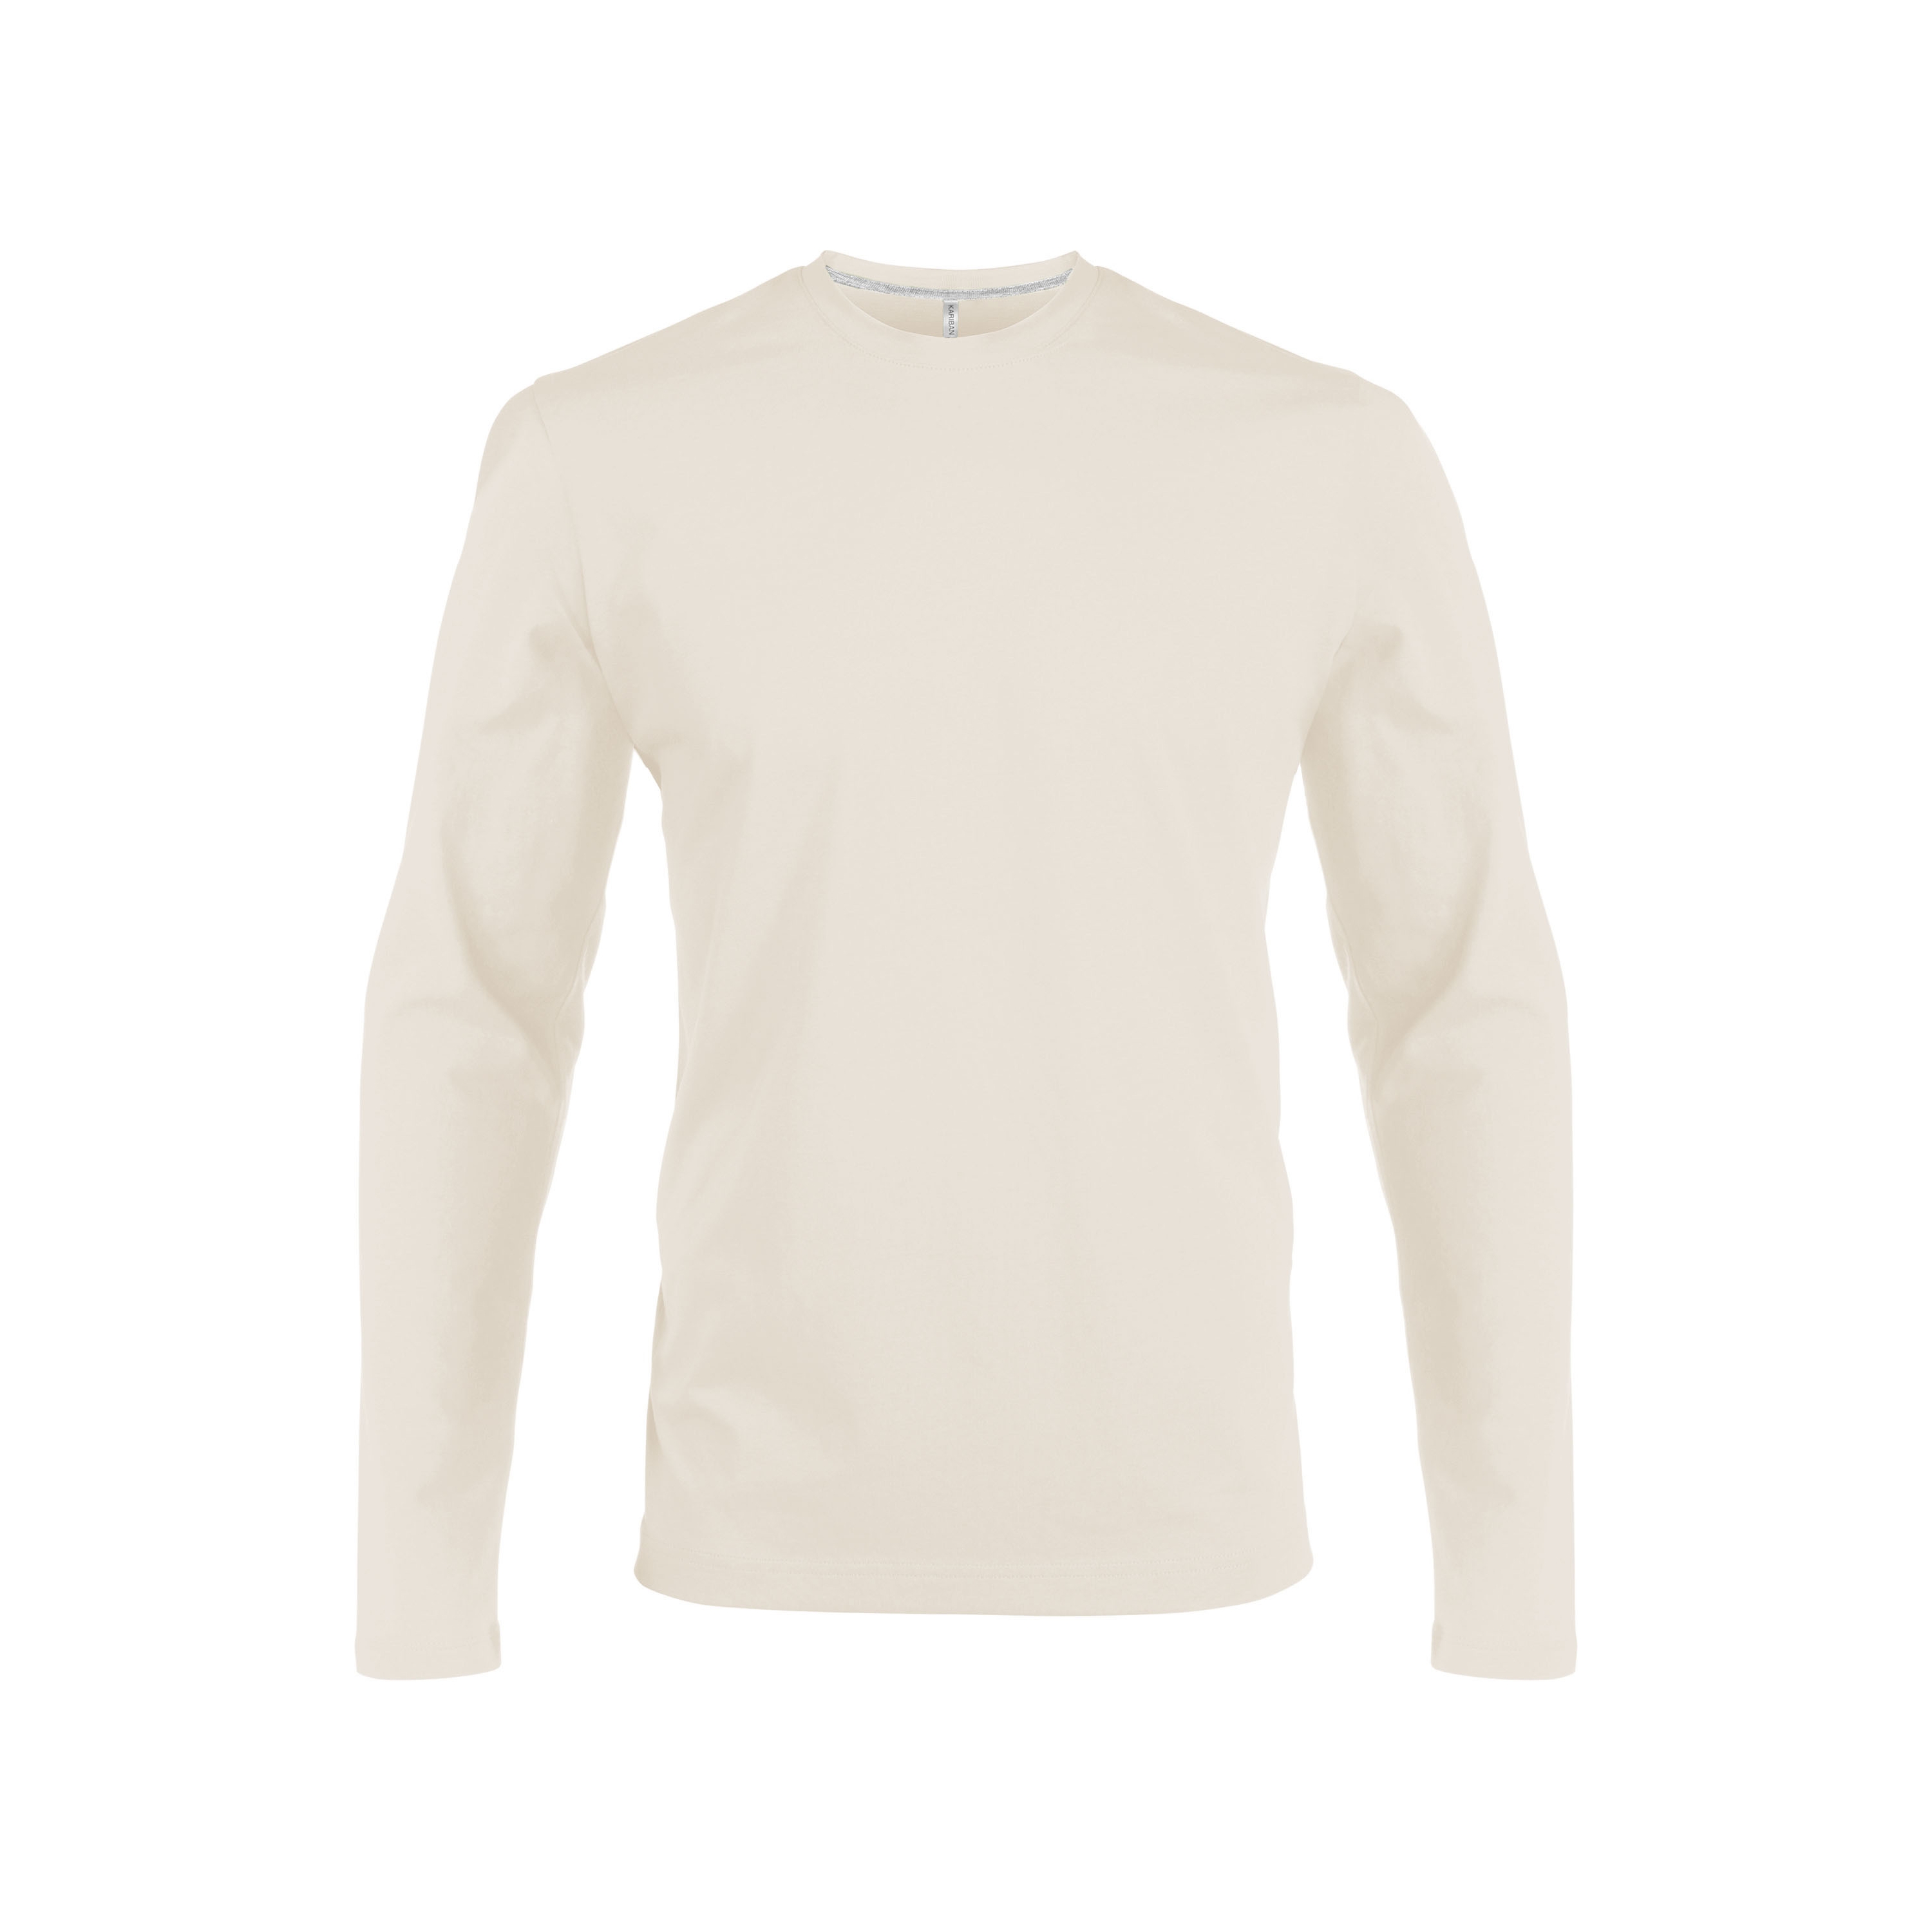 https://static.label-blouse.net/5373-lb_zoom/tshirt-homme-col-v-manches-longues-180-gr-beige.jpg